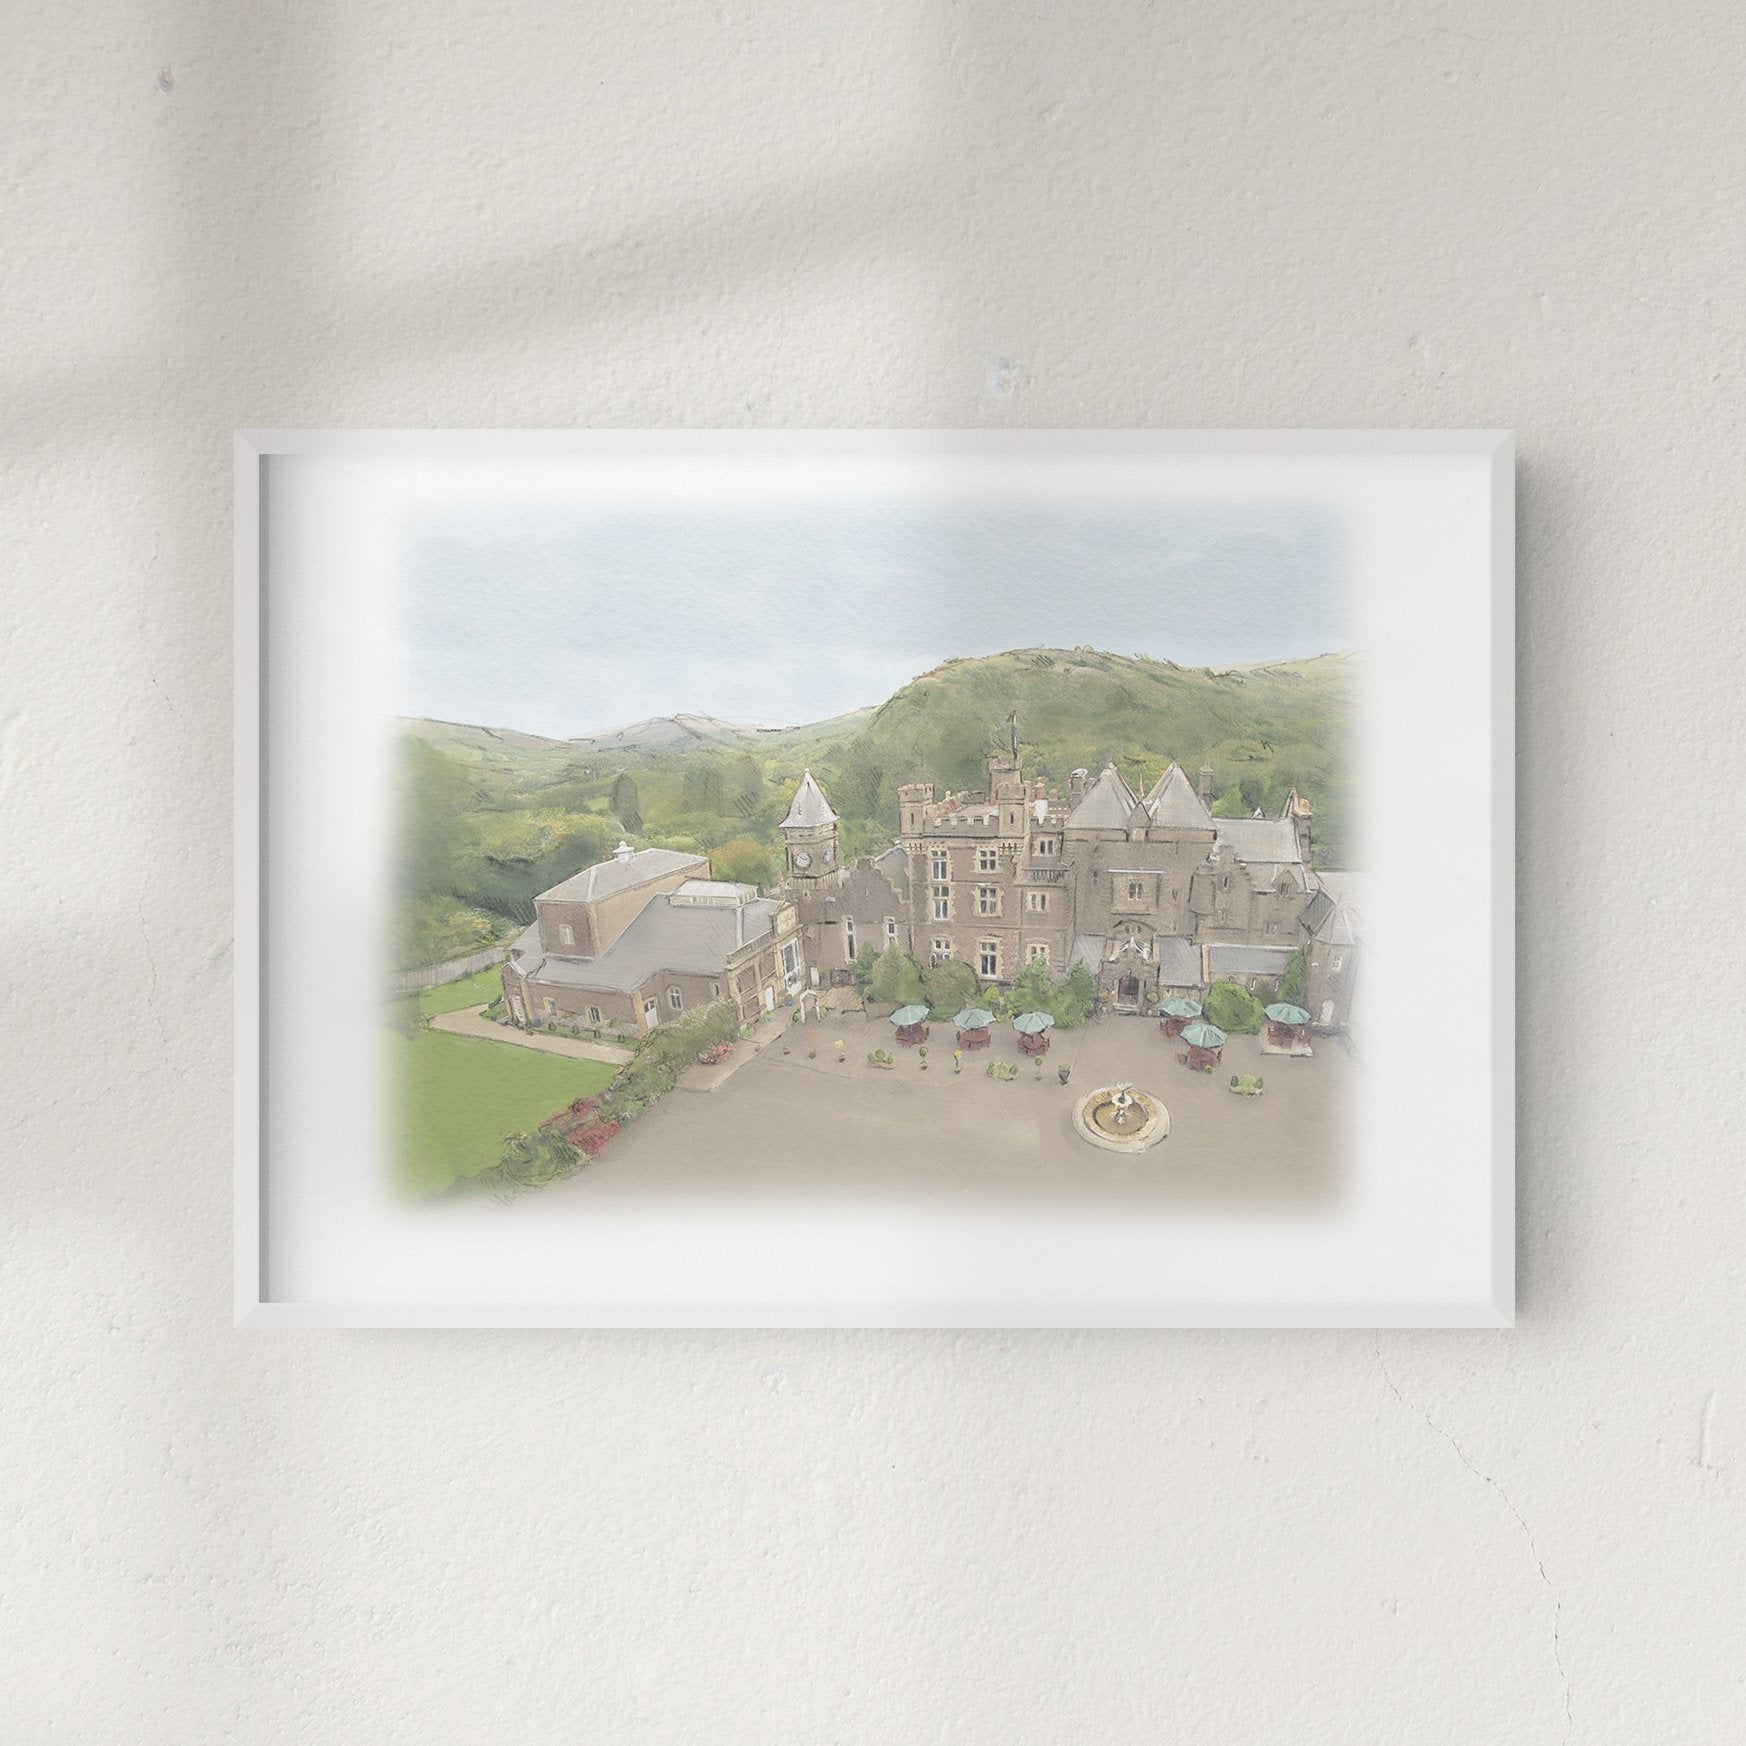 Craig-y-nos Castle, Powys Venue Portrait